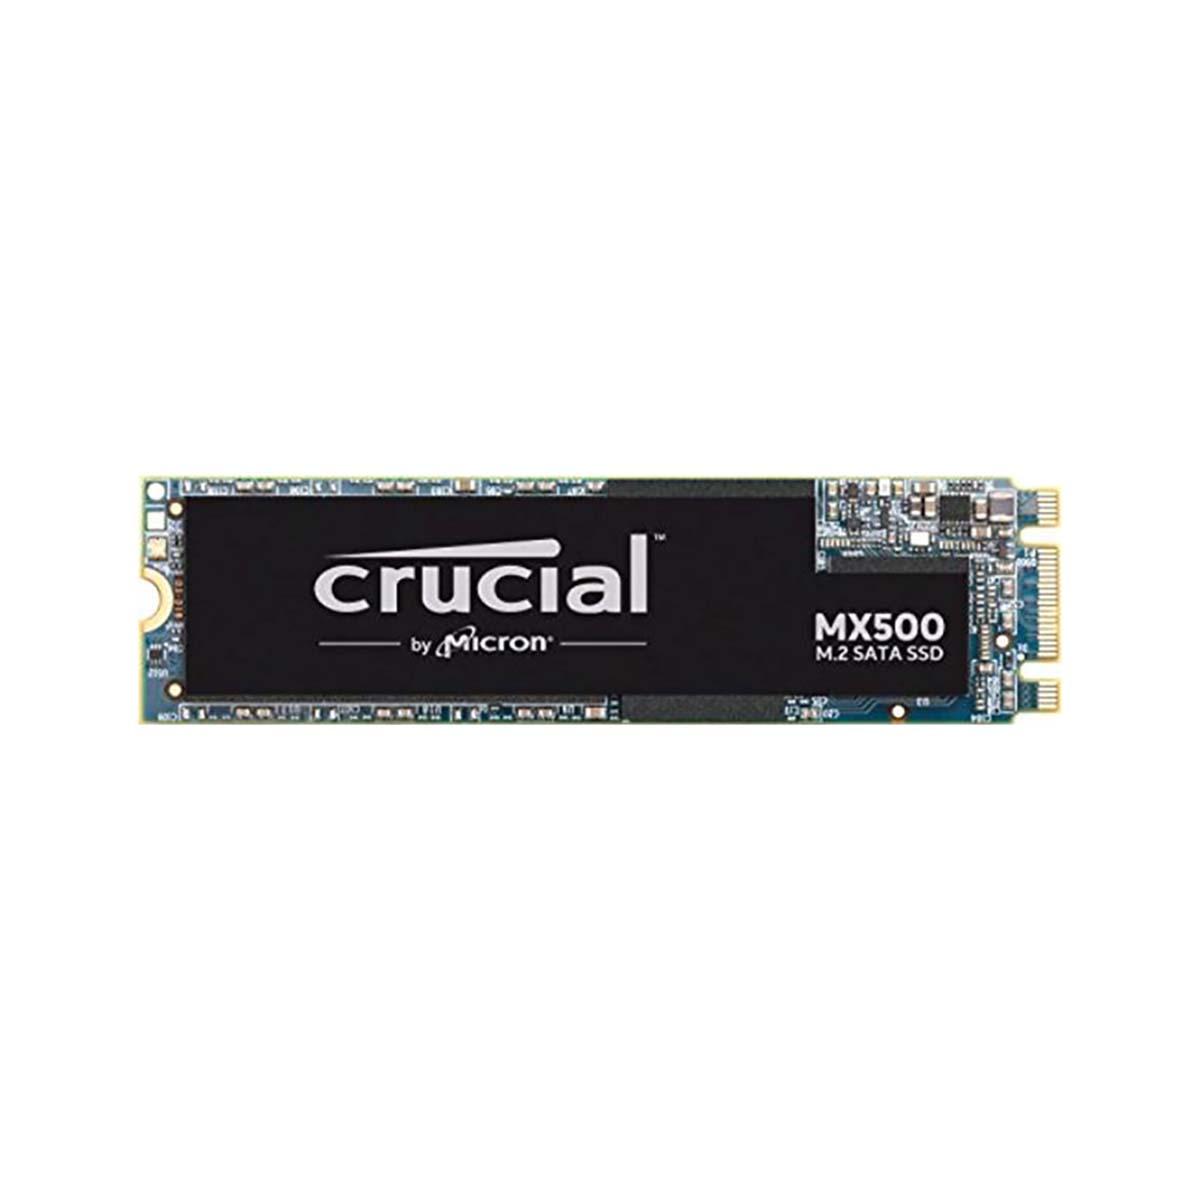 UNIDAD M.2 SSD CRUCIAL 1TB (CT1000MX500SSD4) MX500, 2280 3D NAND, SATA - CRUCIAL